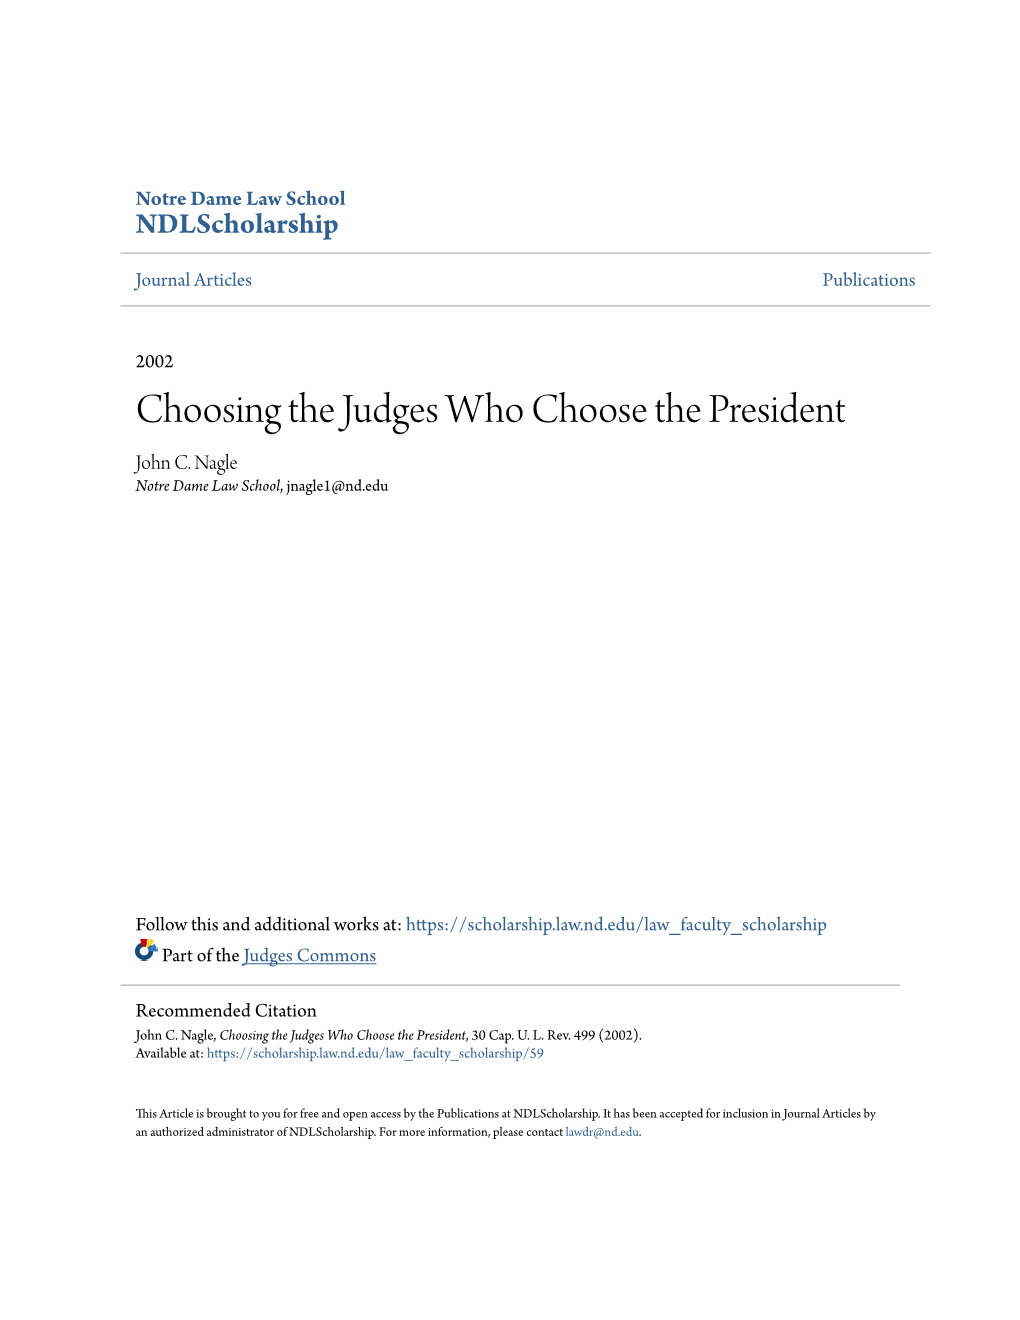 Choosing the Judges Who Choose the President John C